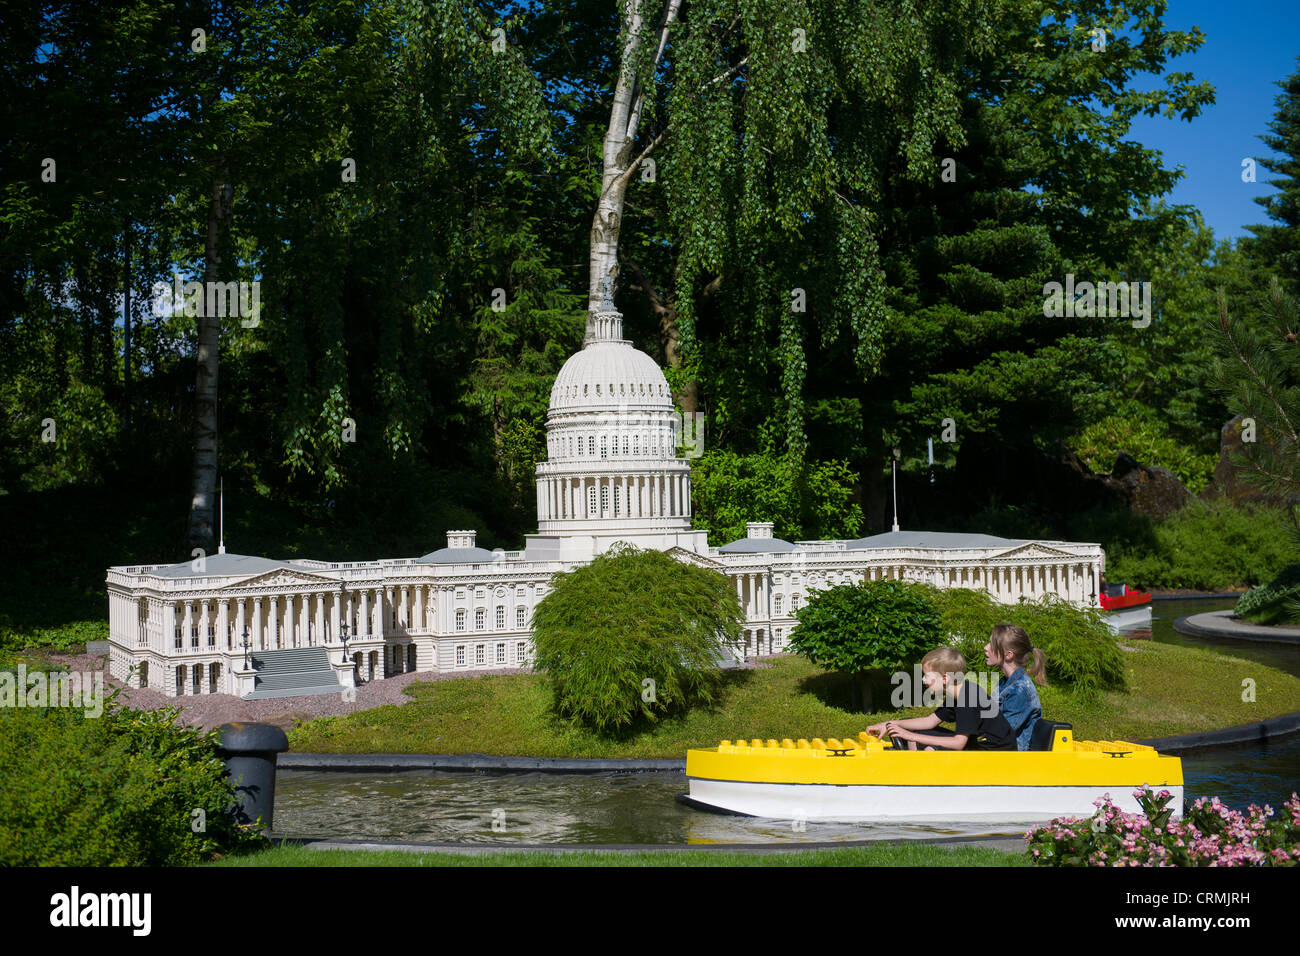 Kinder am Miniboat vorbei an Lego Modell des United States Capitol Building, Legoland, Billund, Dänemark Stockfoto